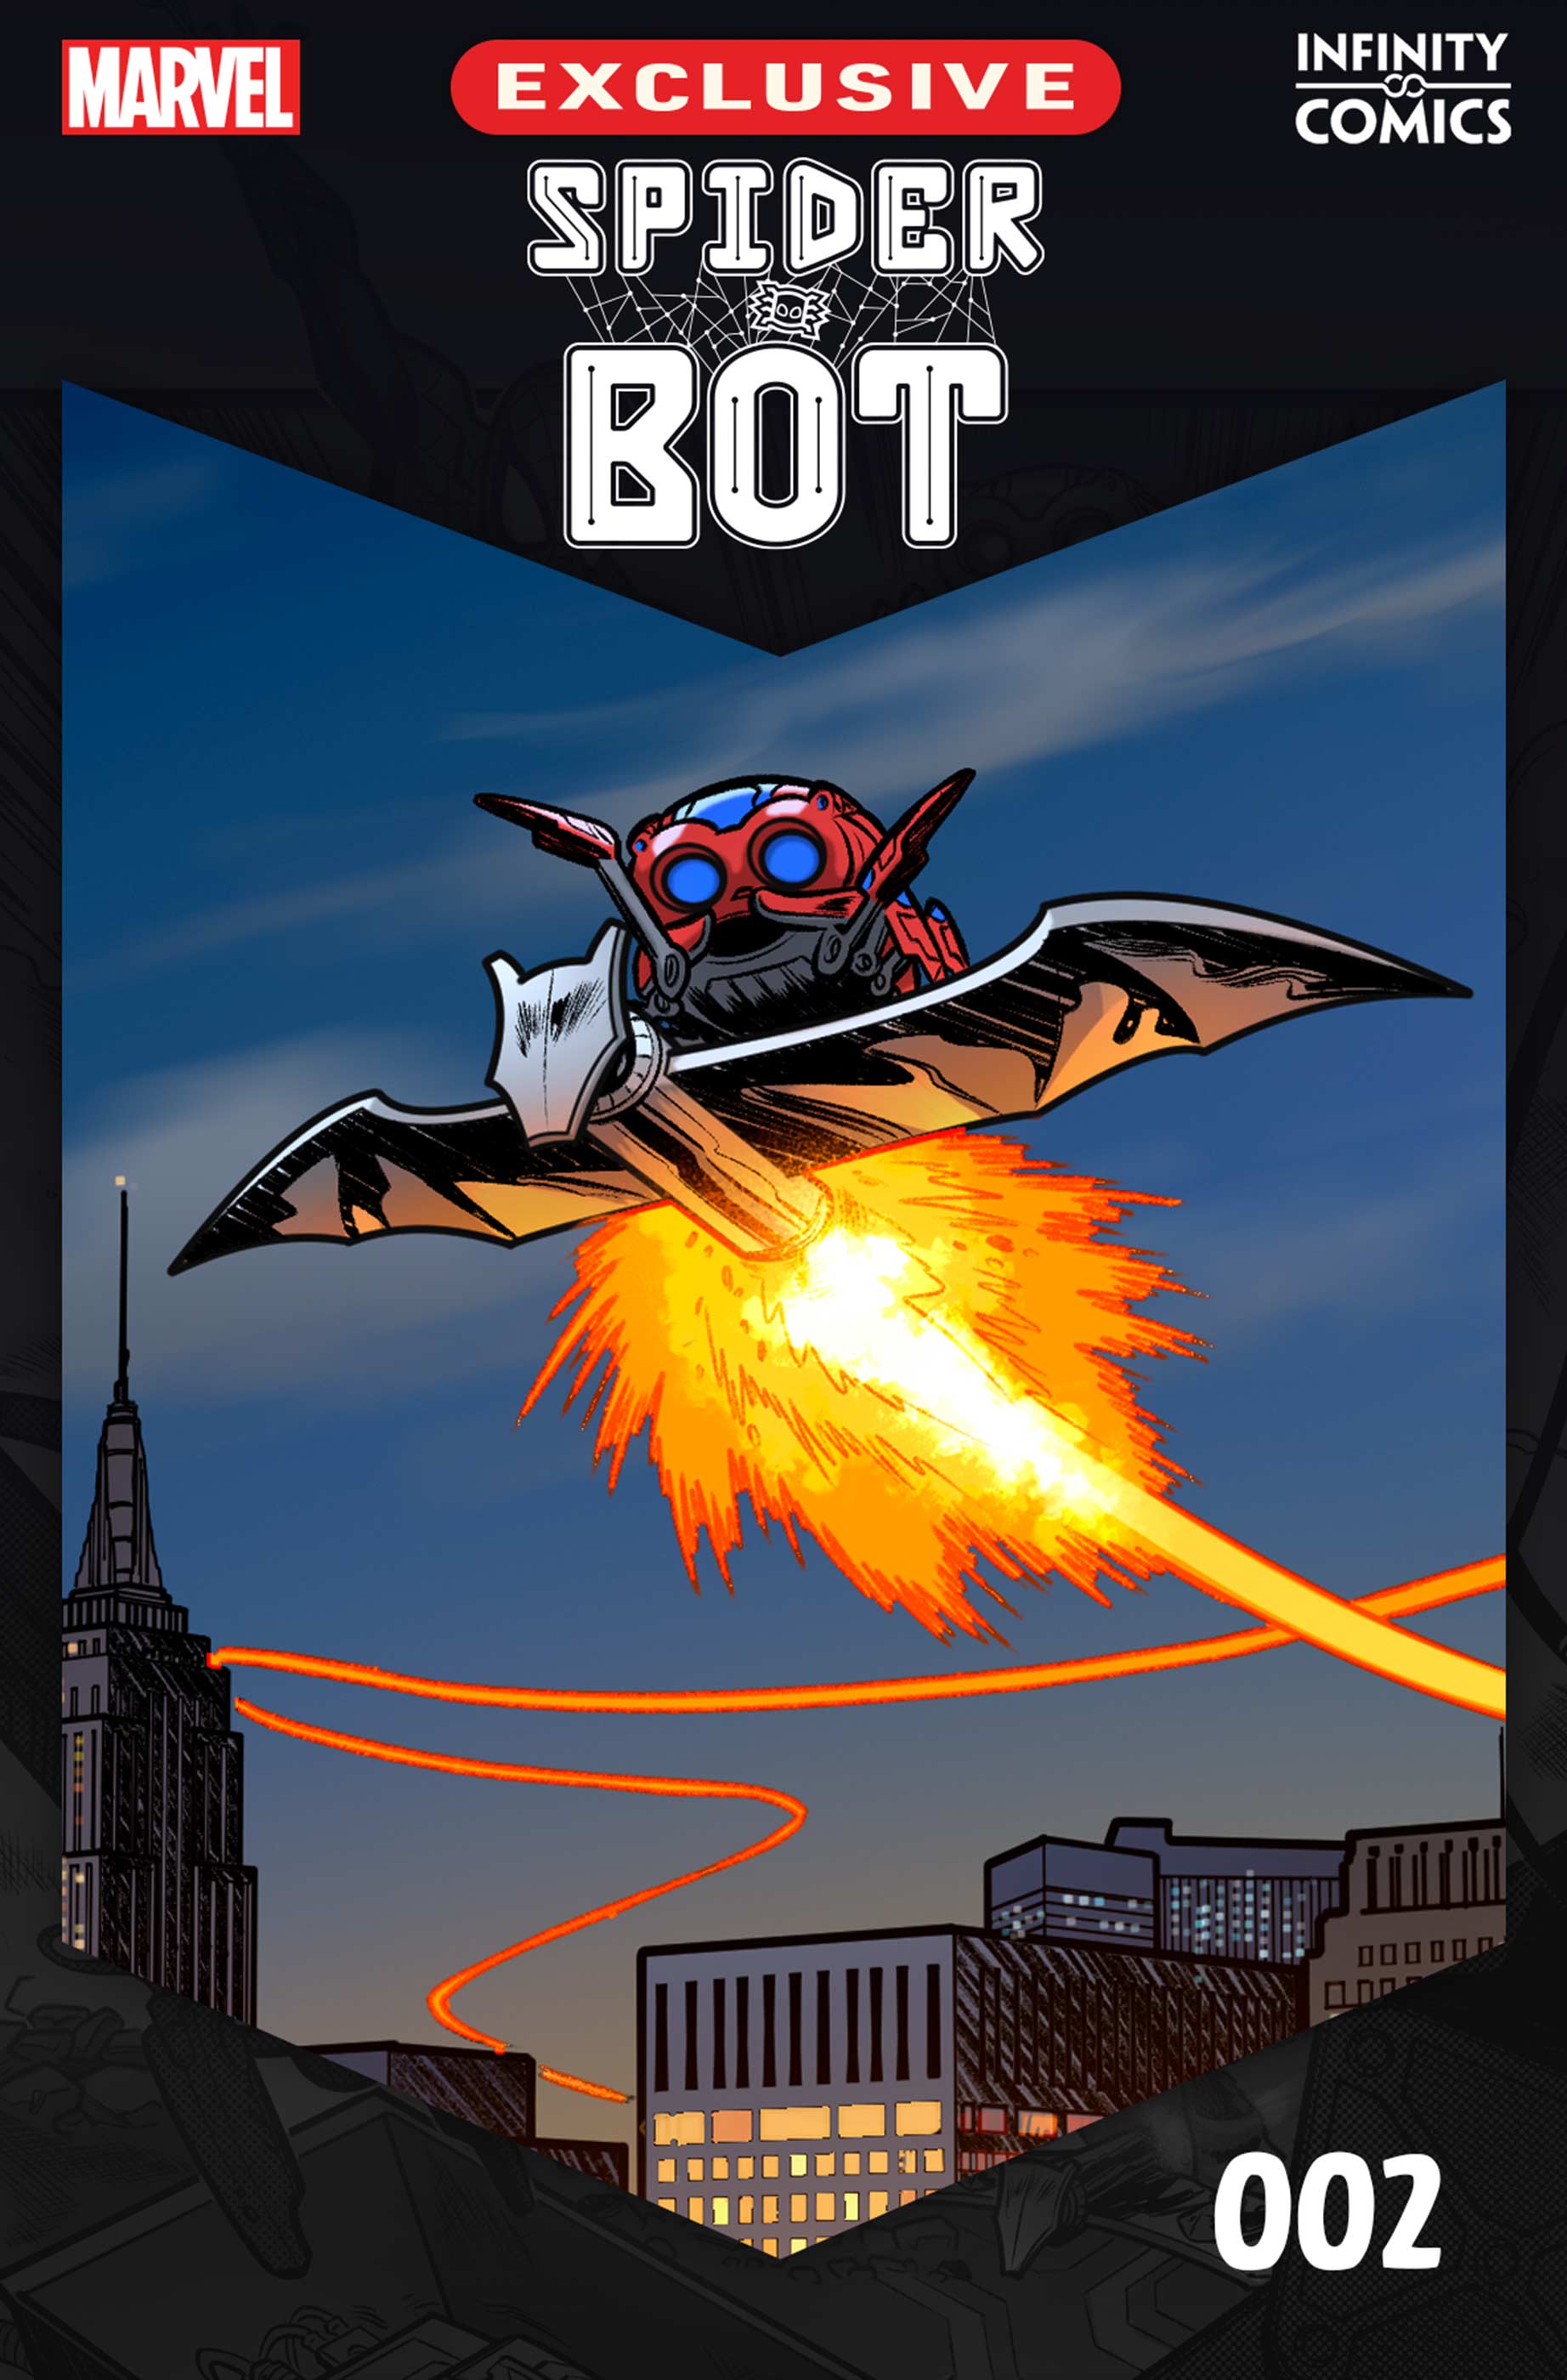 Spider-Bot Infinity Comic (2021) #2